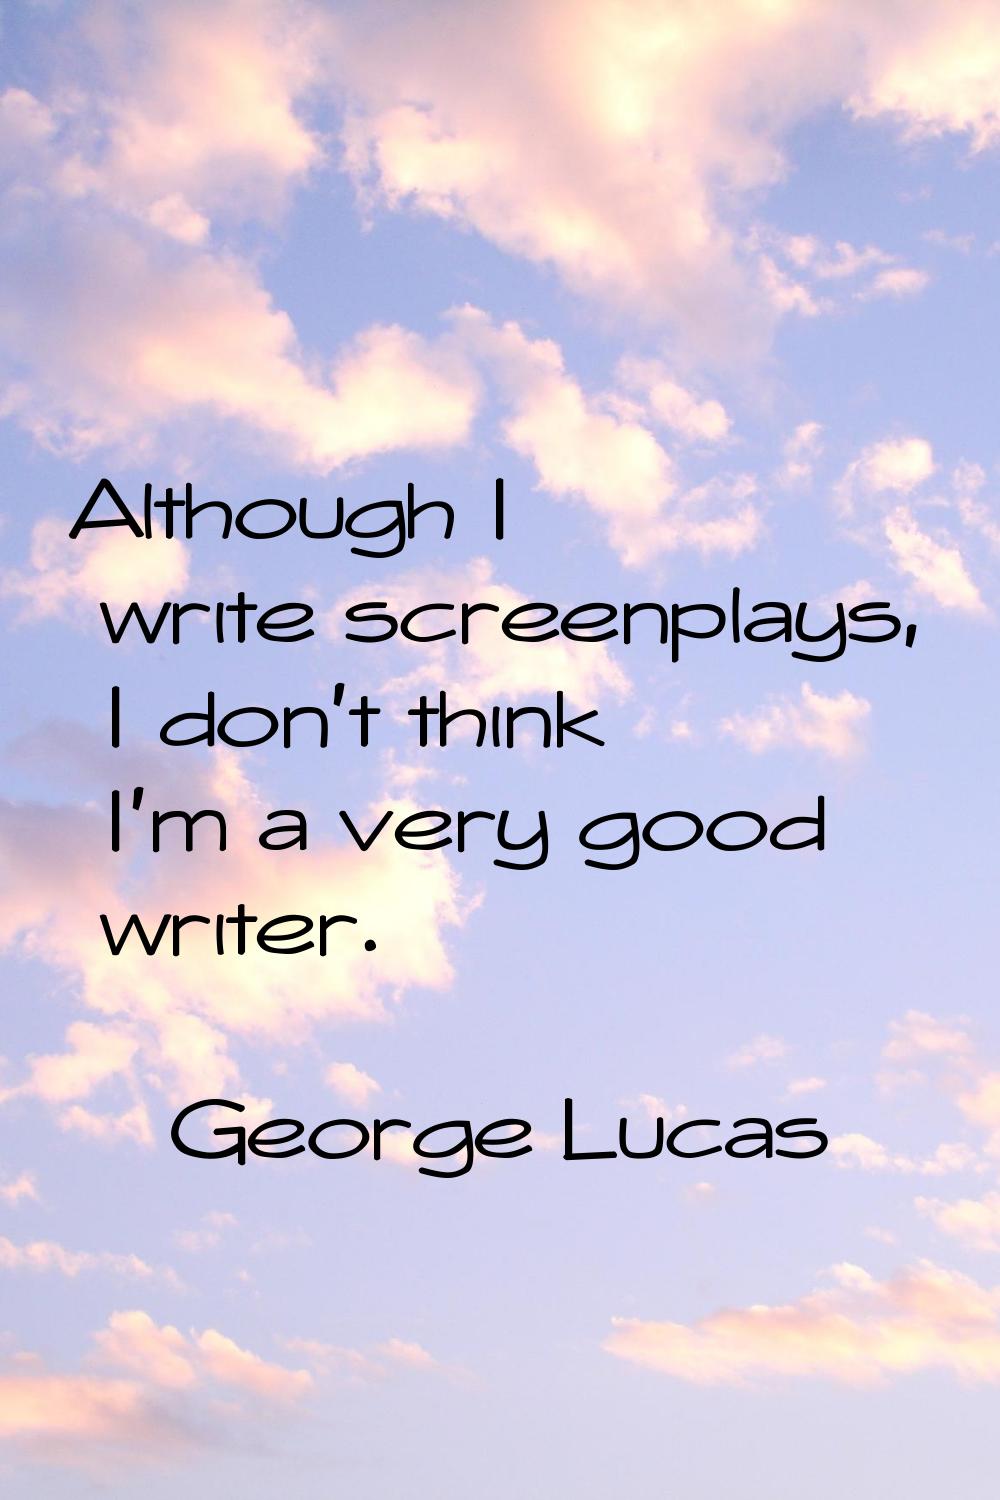 Although I write screenplays, I don't think I'm a very good writer.